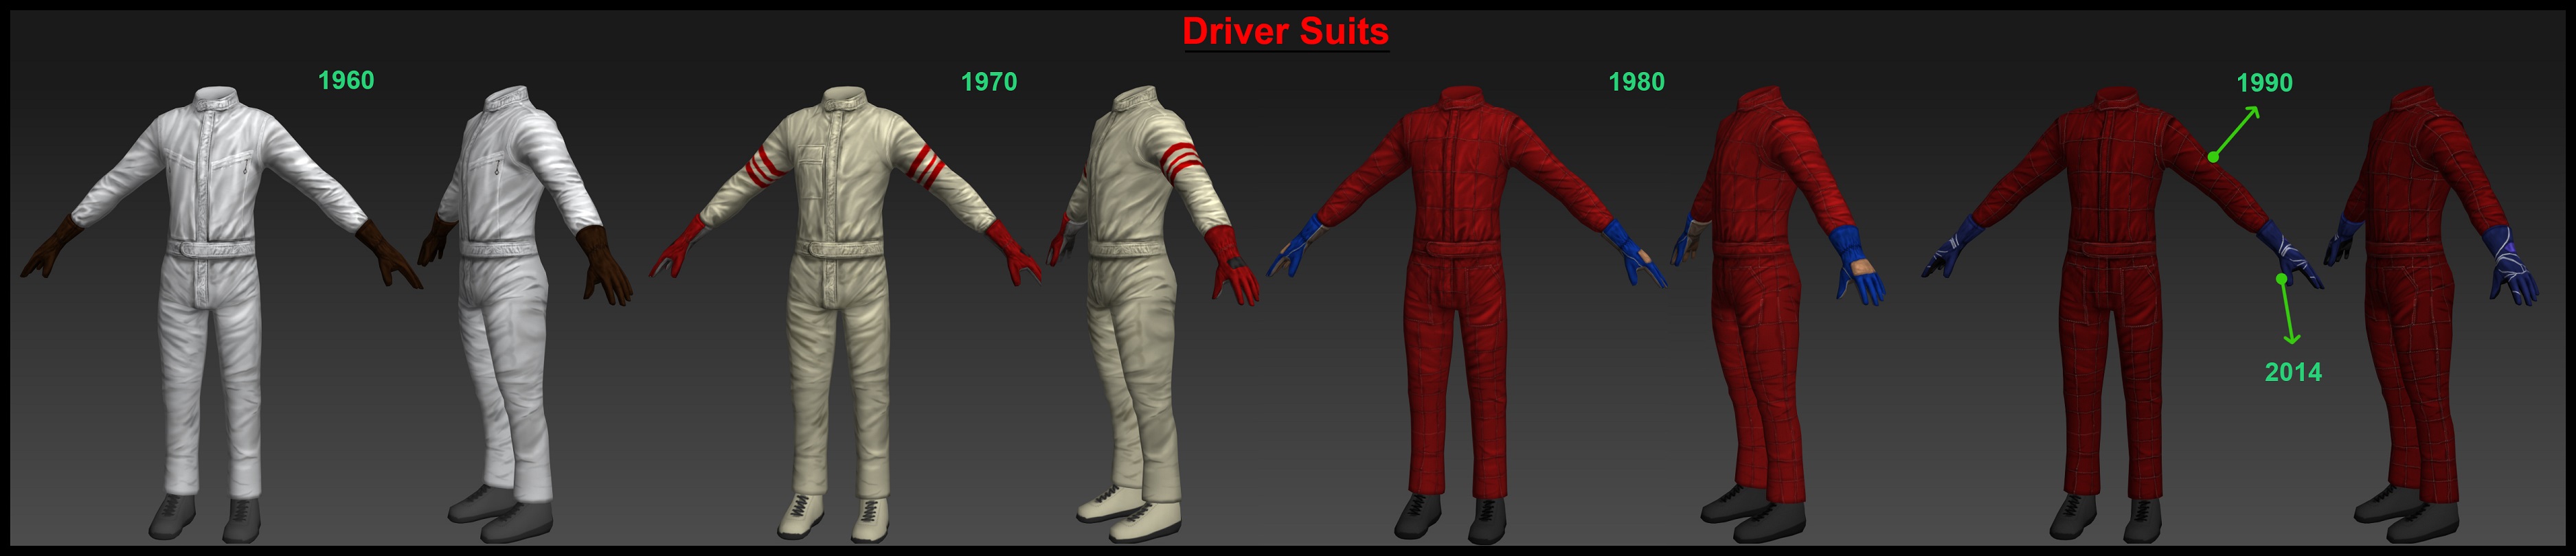 AMS Driver Suits.jpg